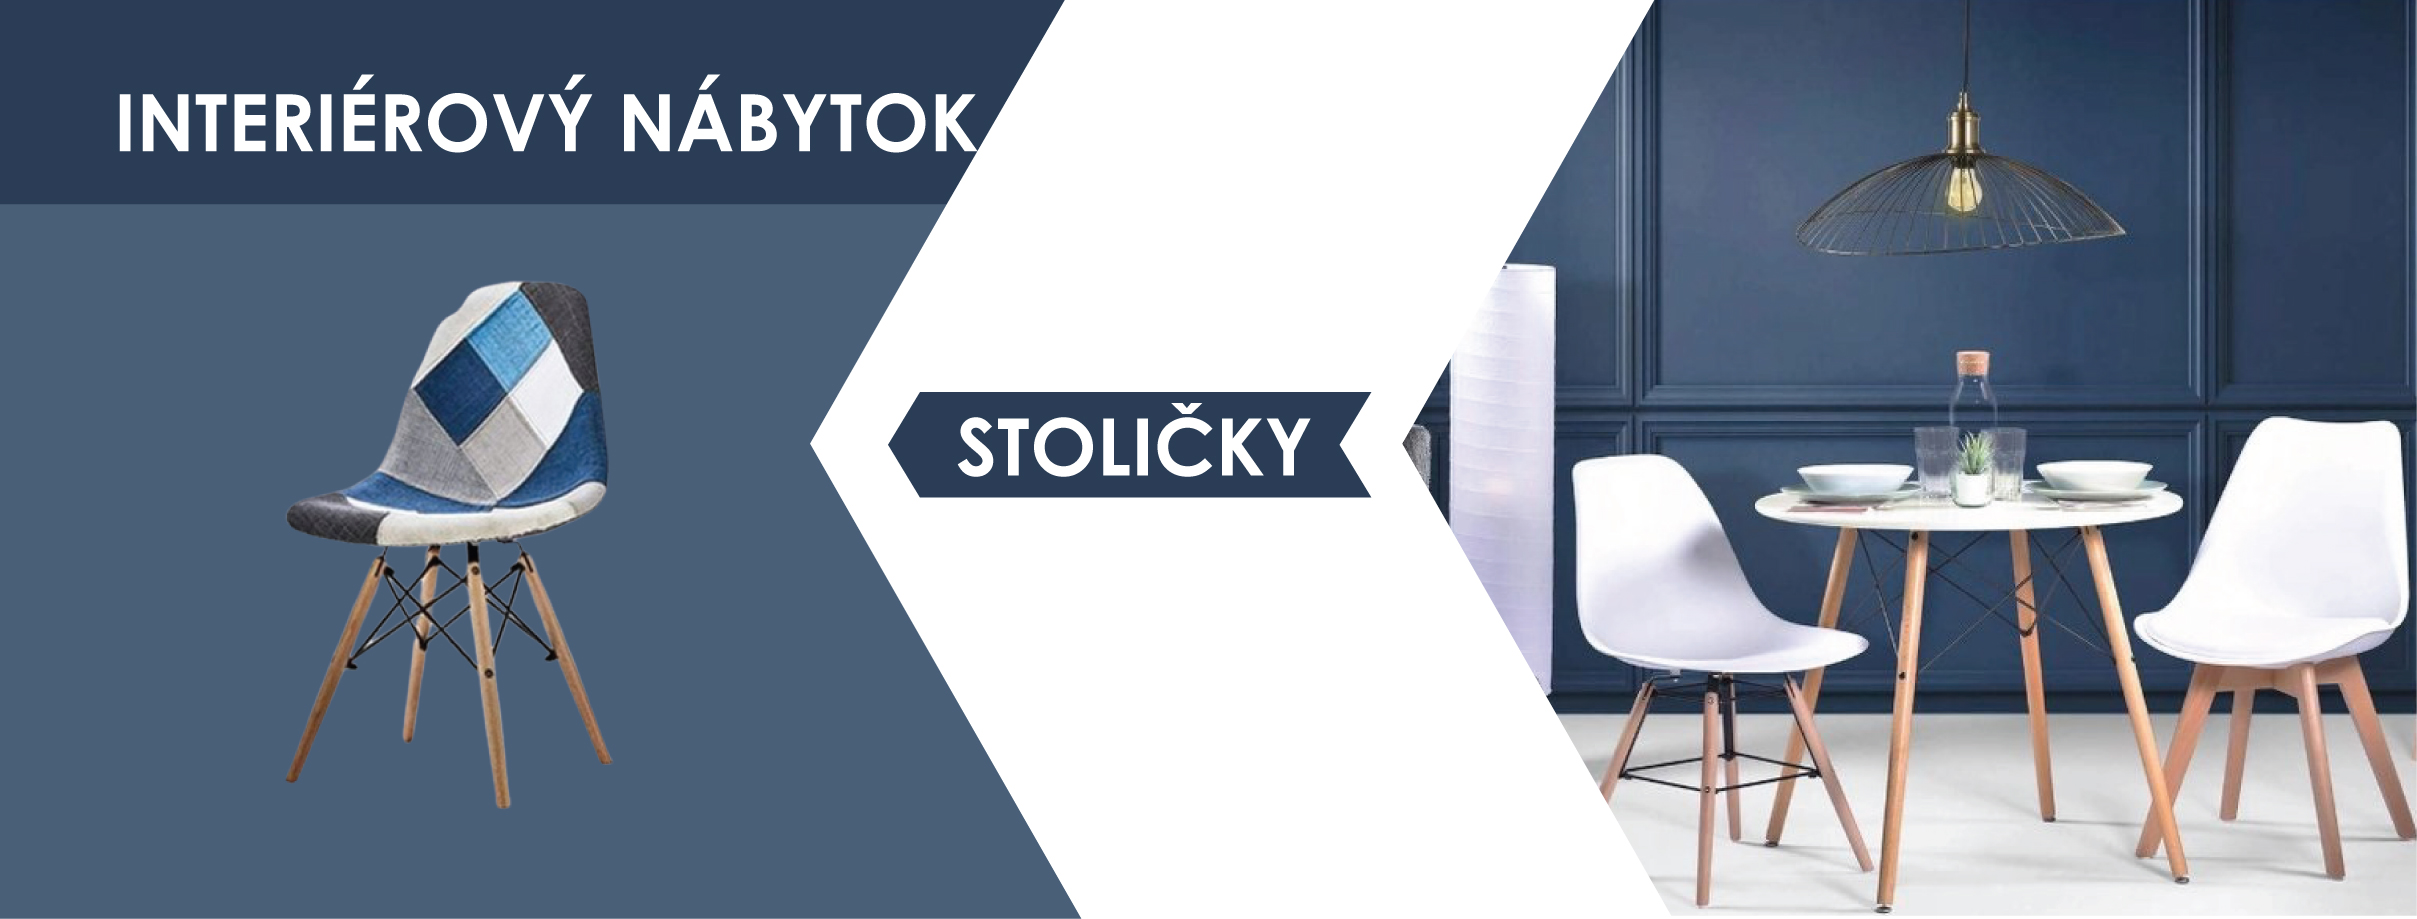 sk_NABYTOK_STOLICKY-01